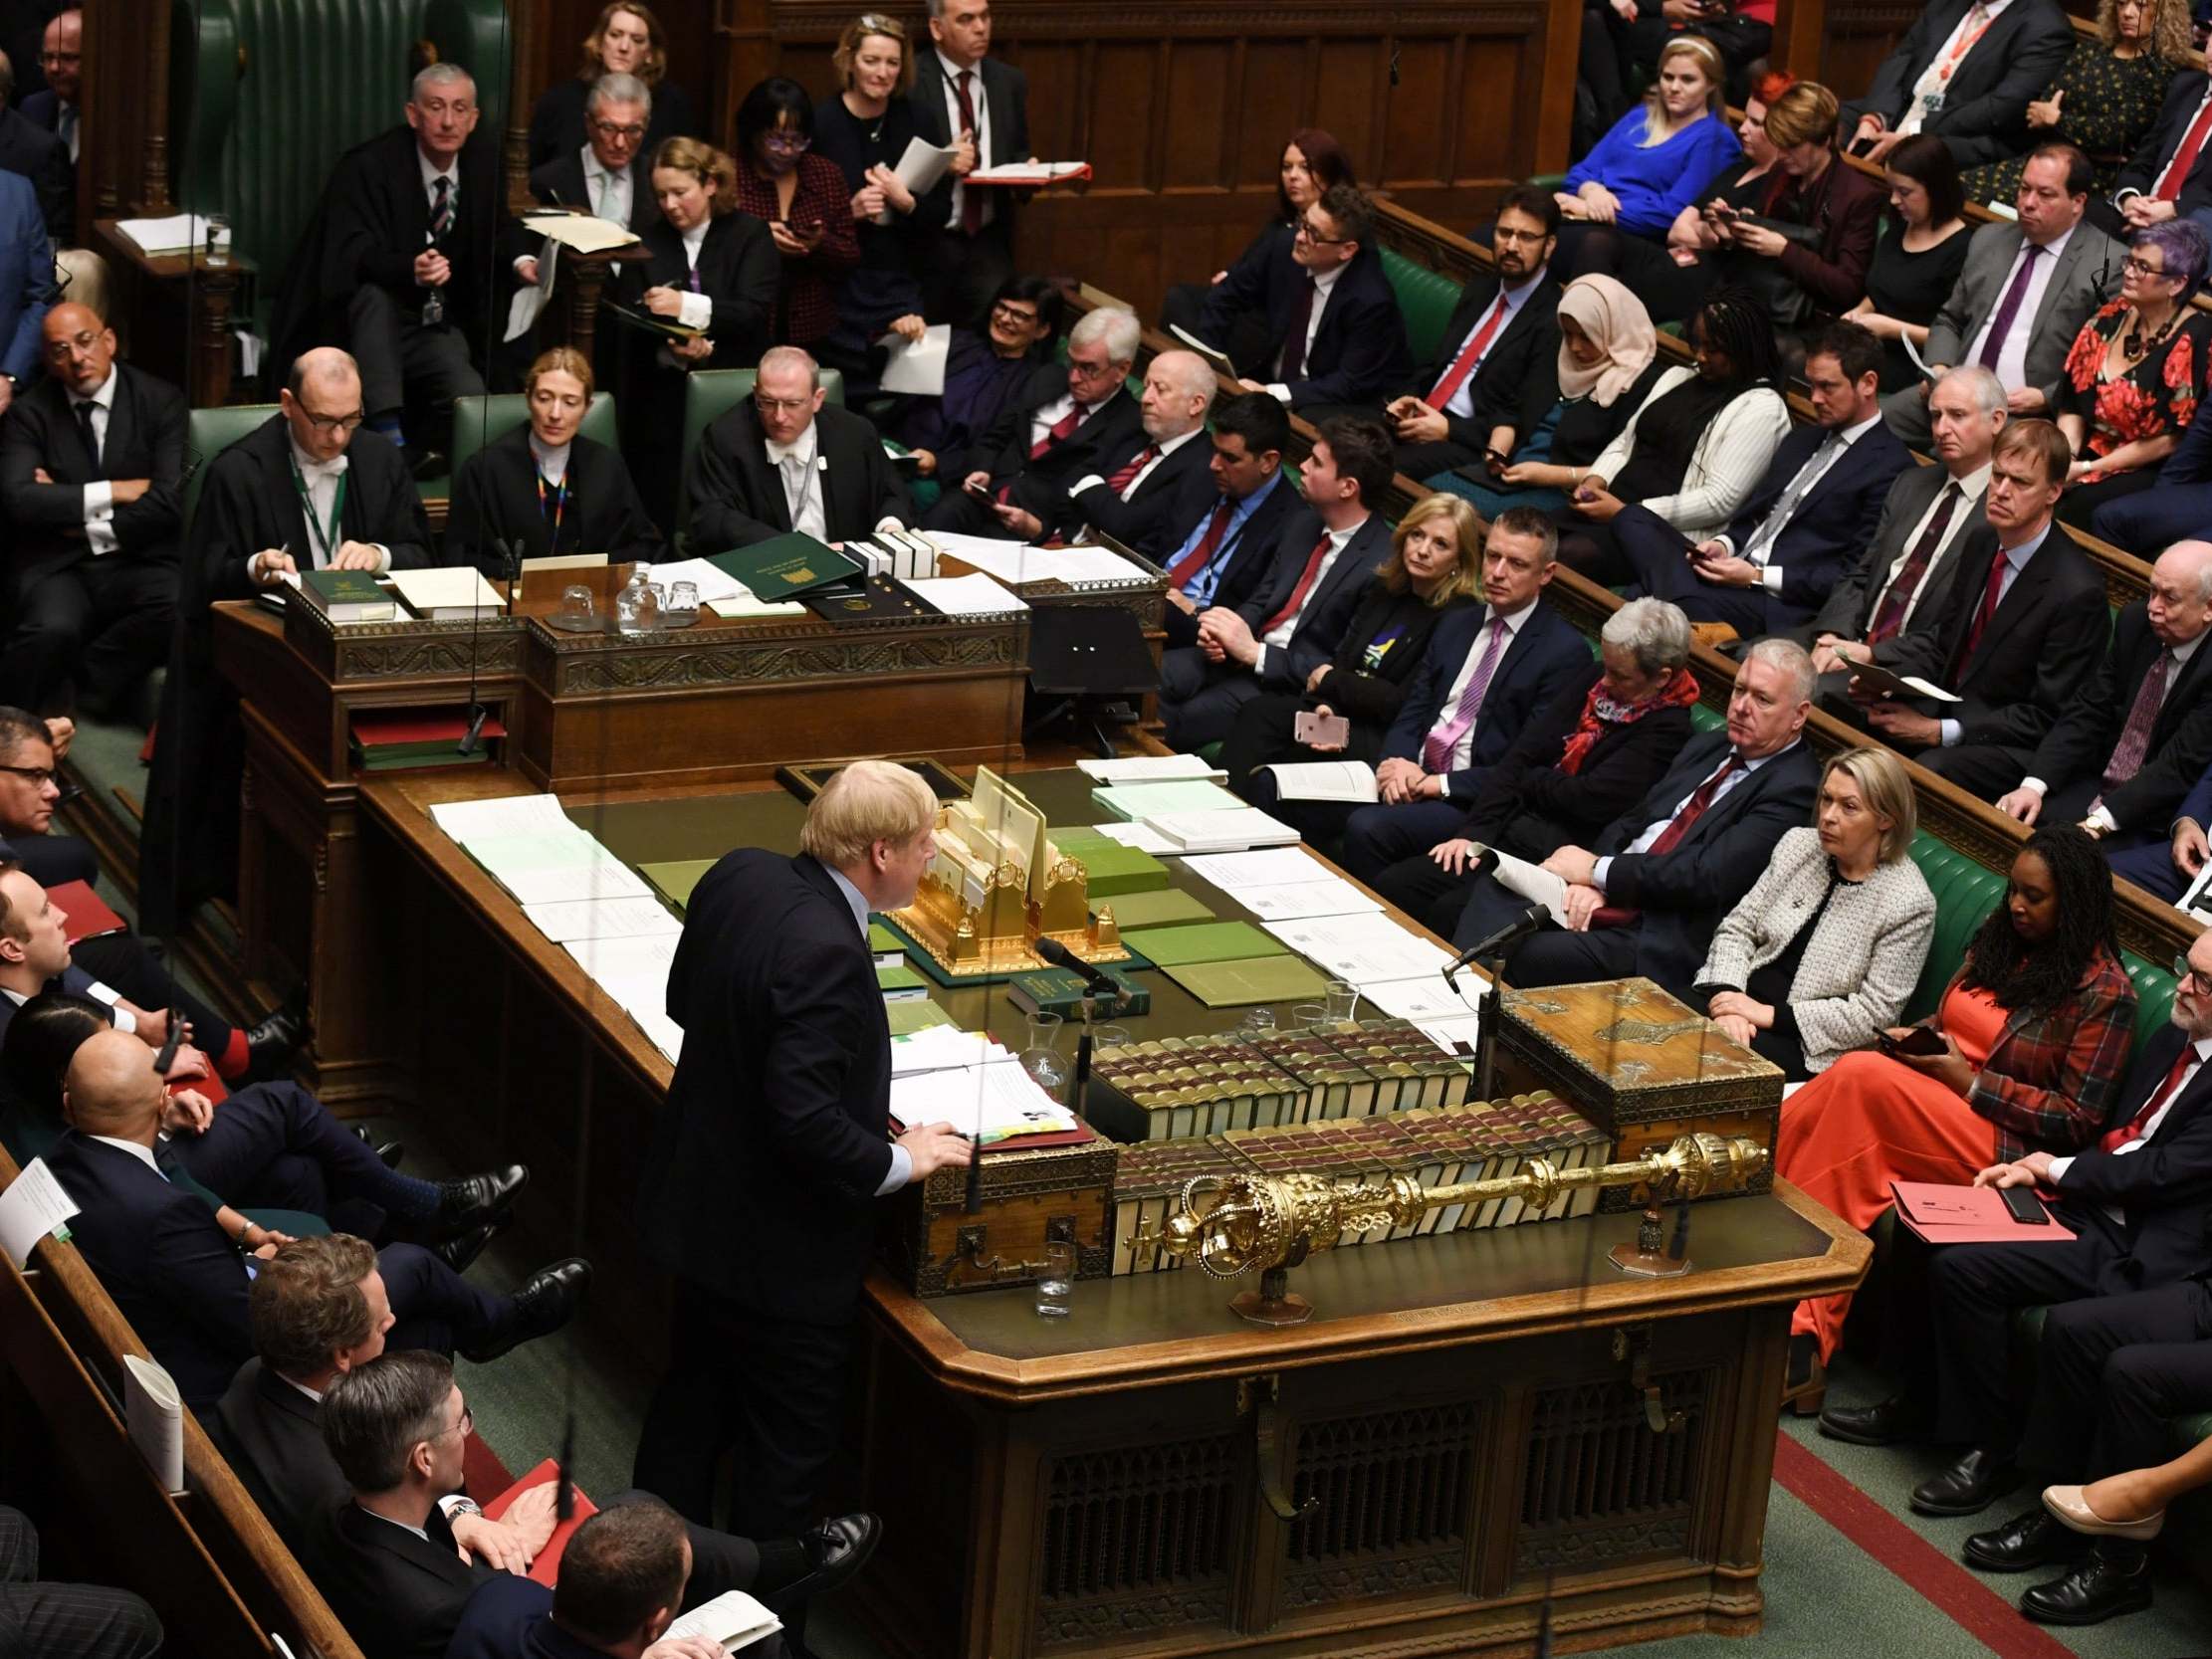 Boris Johnson addresses parliament during PMQs last week